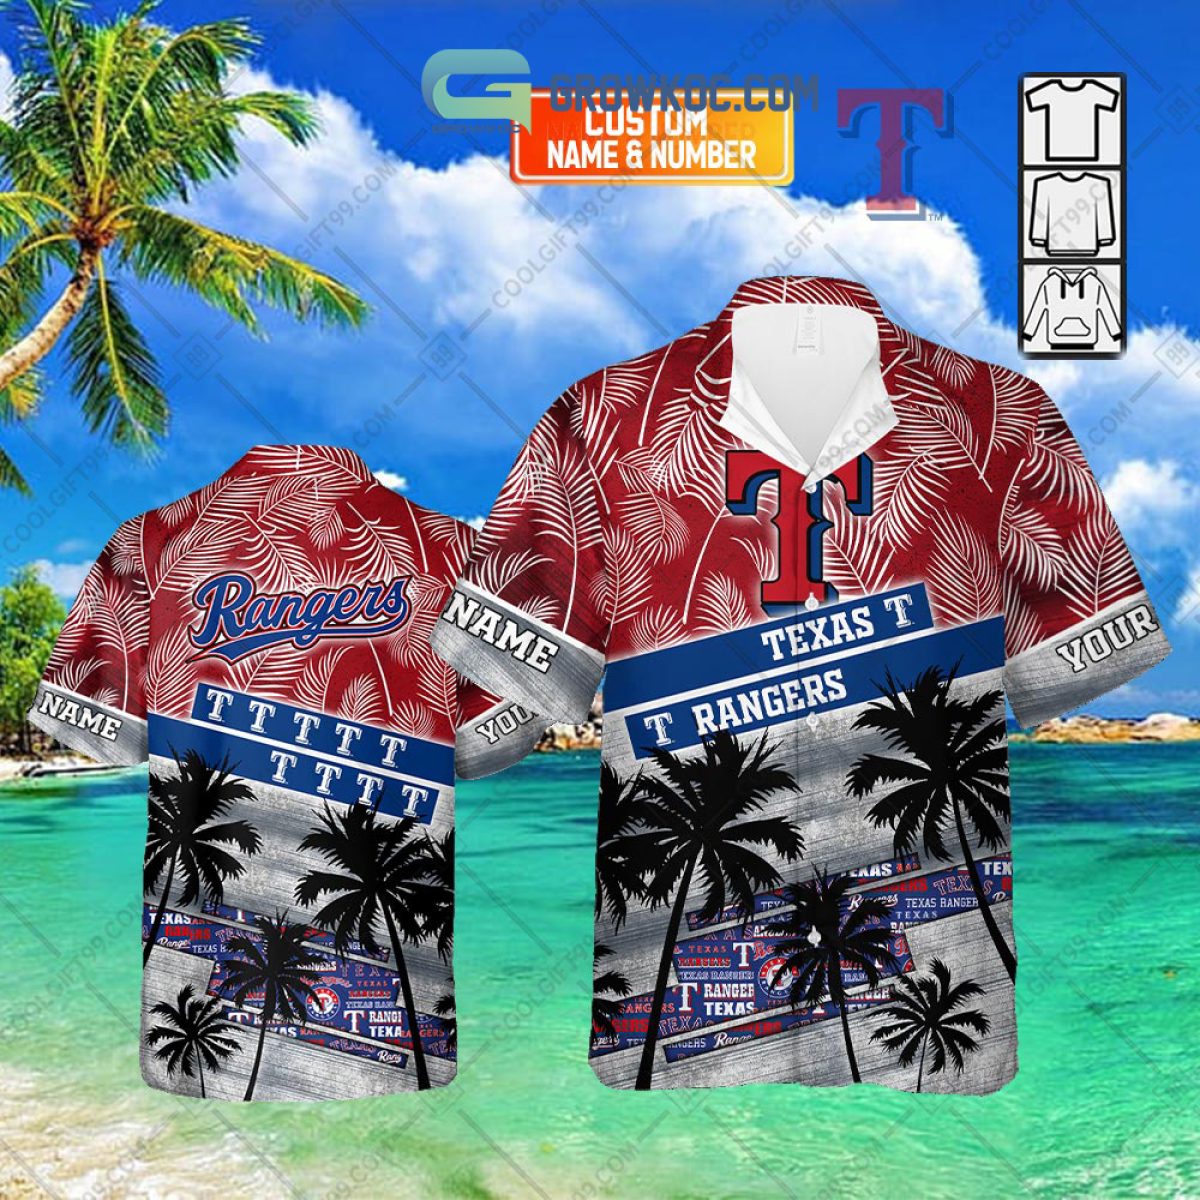 Baltimore Orioles Funny Hawaiian Shirt - Growkoc